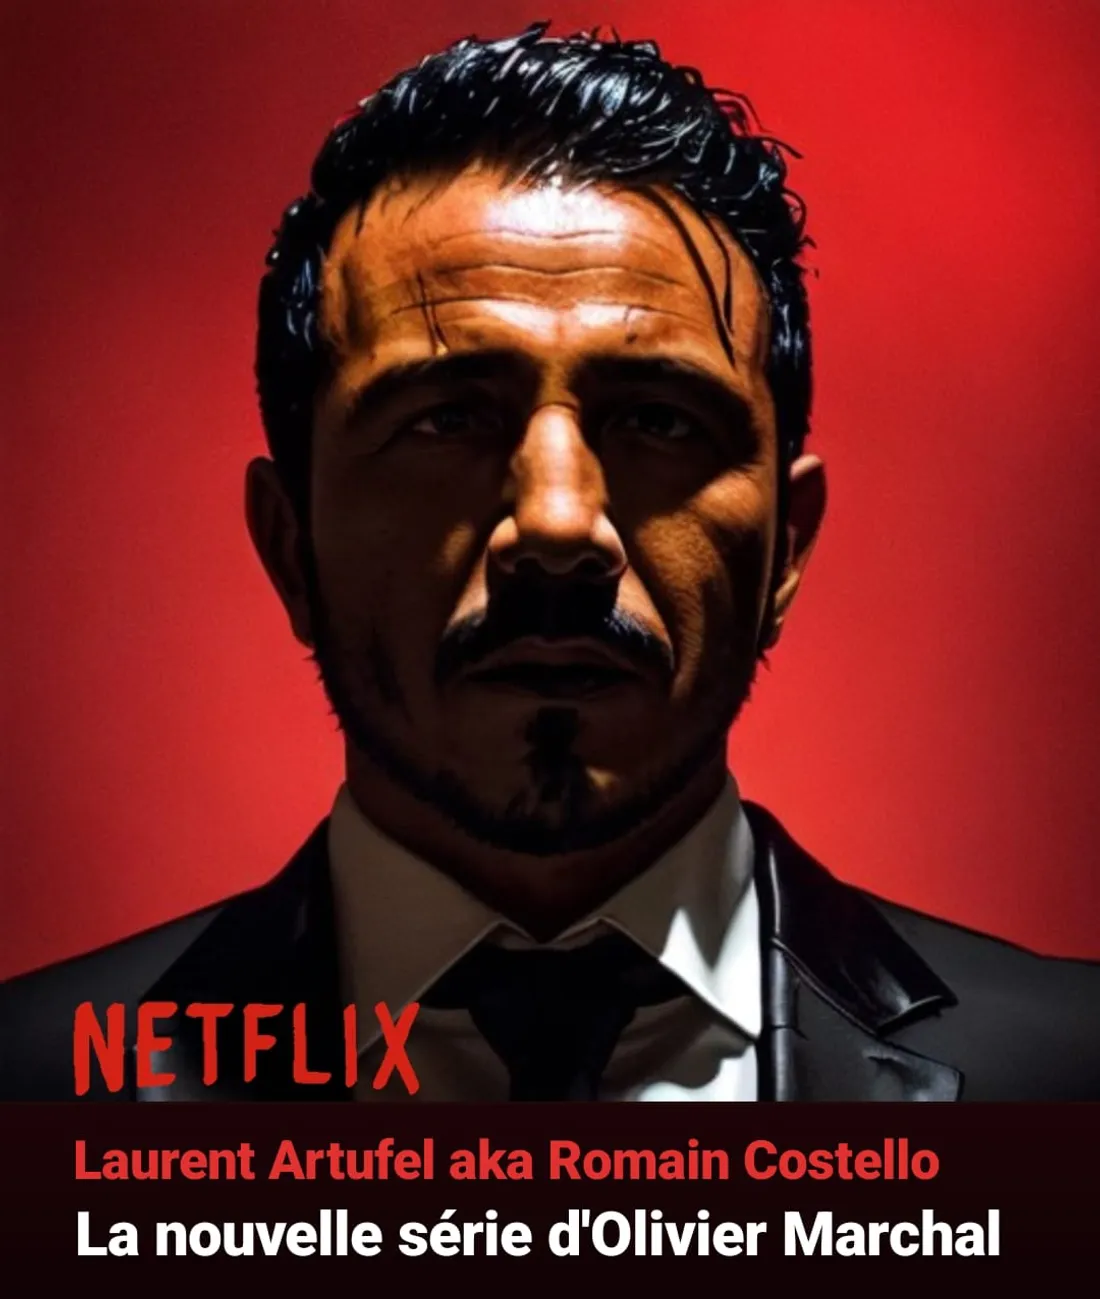 Laurent Artufel aka Romain Costello